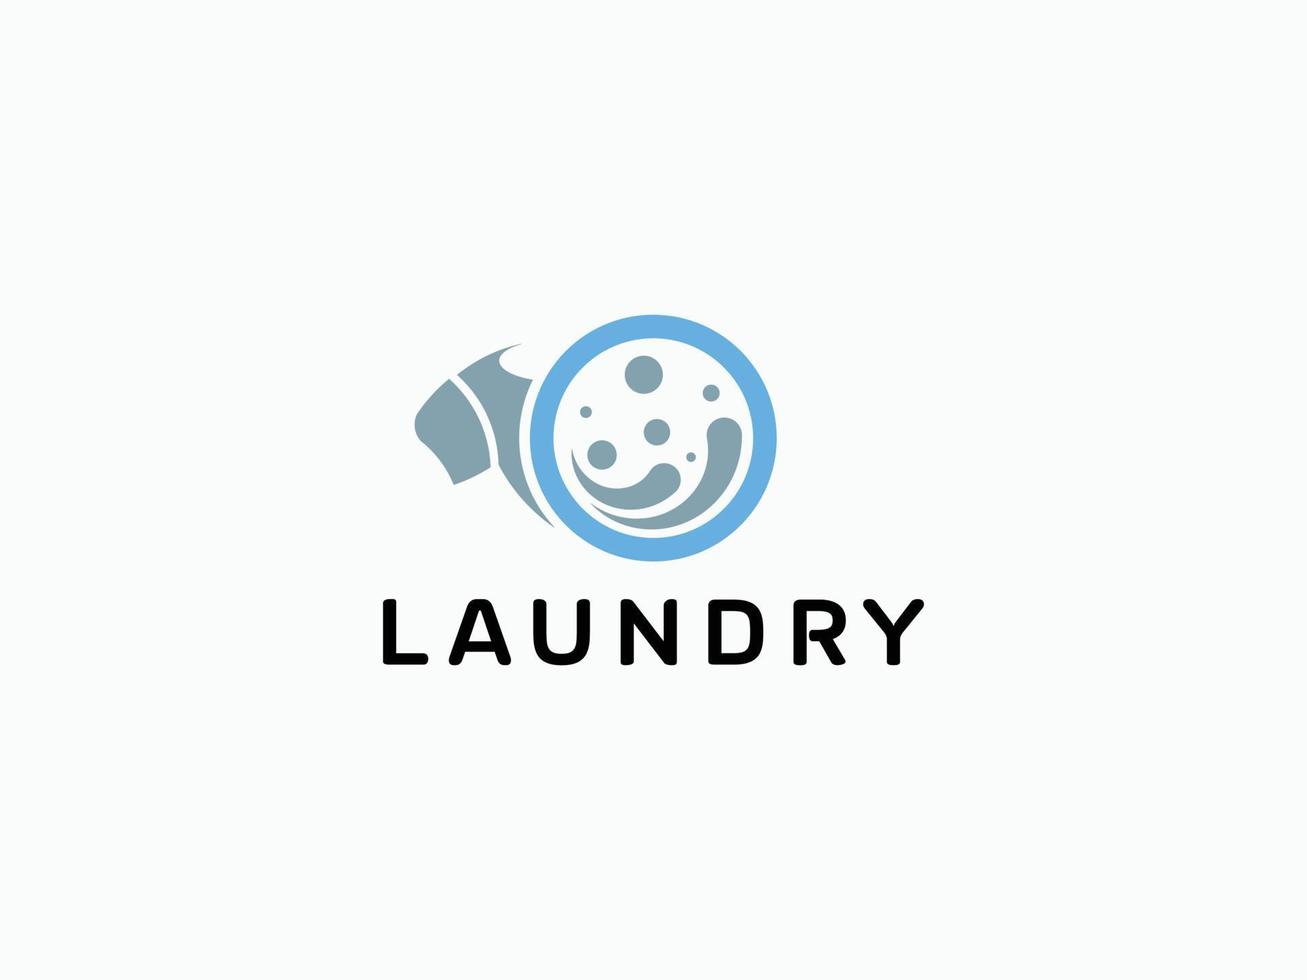 free vector laundry logo. 18034037 Vector Art at Vecteezy